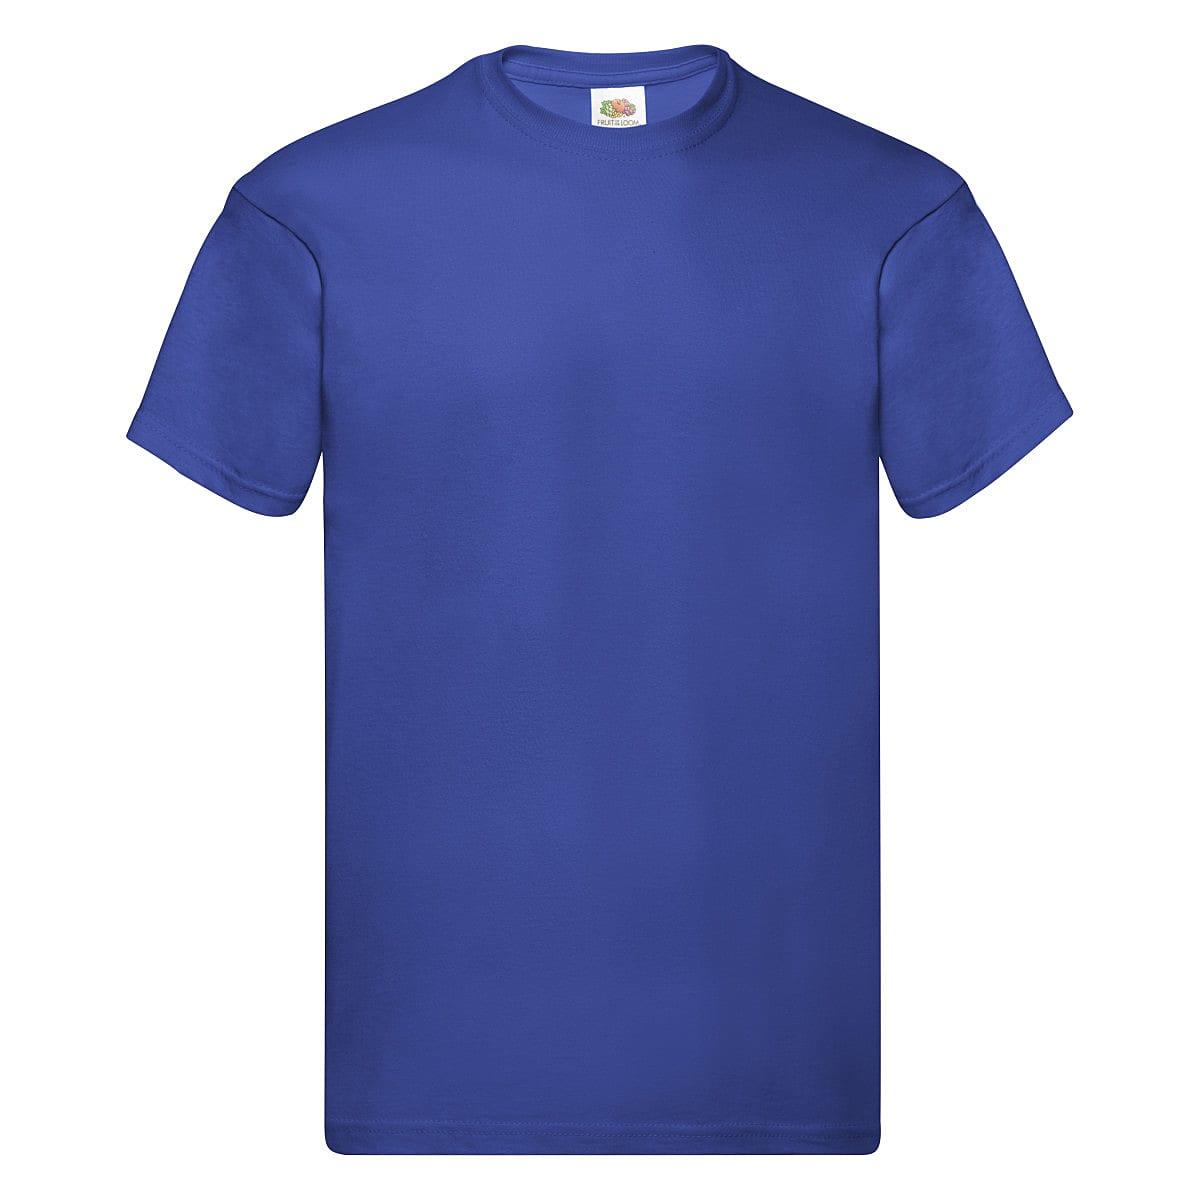 Fruit Of The Loom Original Full Cut T-Shirt in Royal Blue (Product Code: 61082)